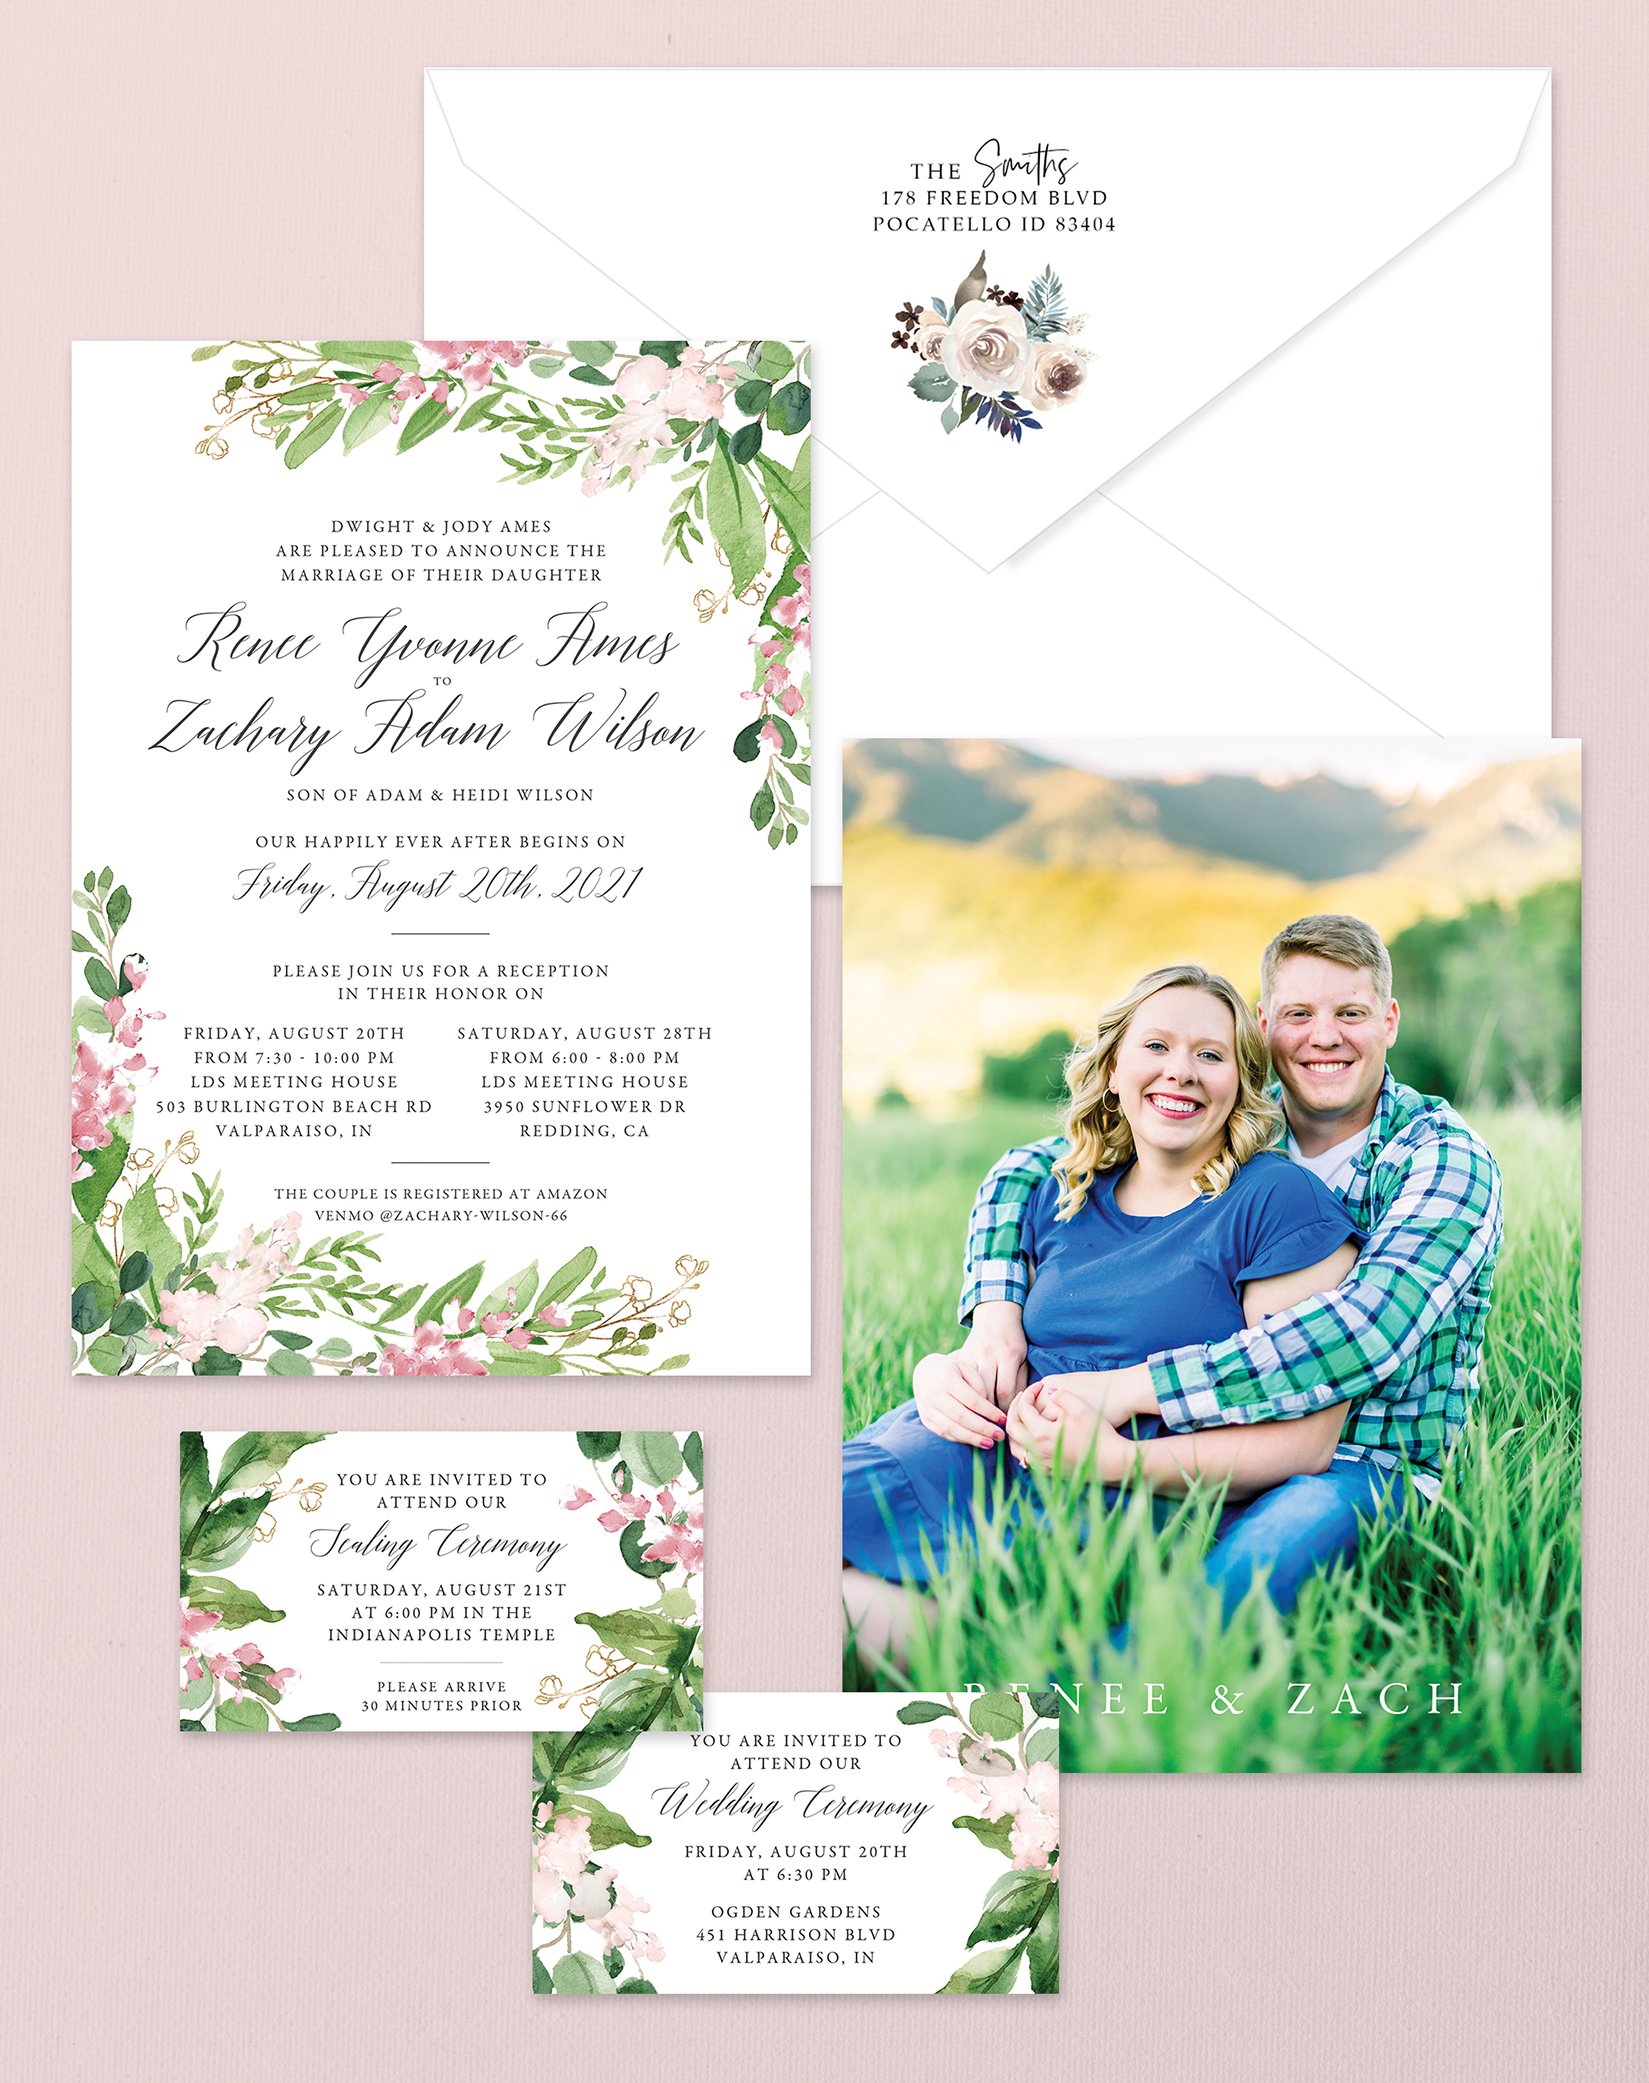 Renee + Zachary Wedding Invitations — Anthology Print pic